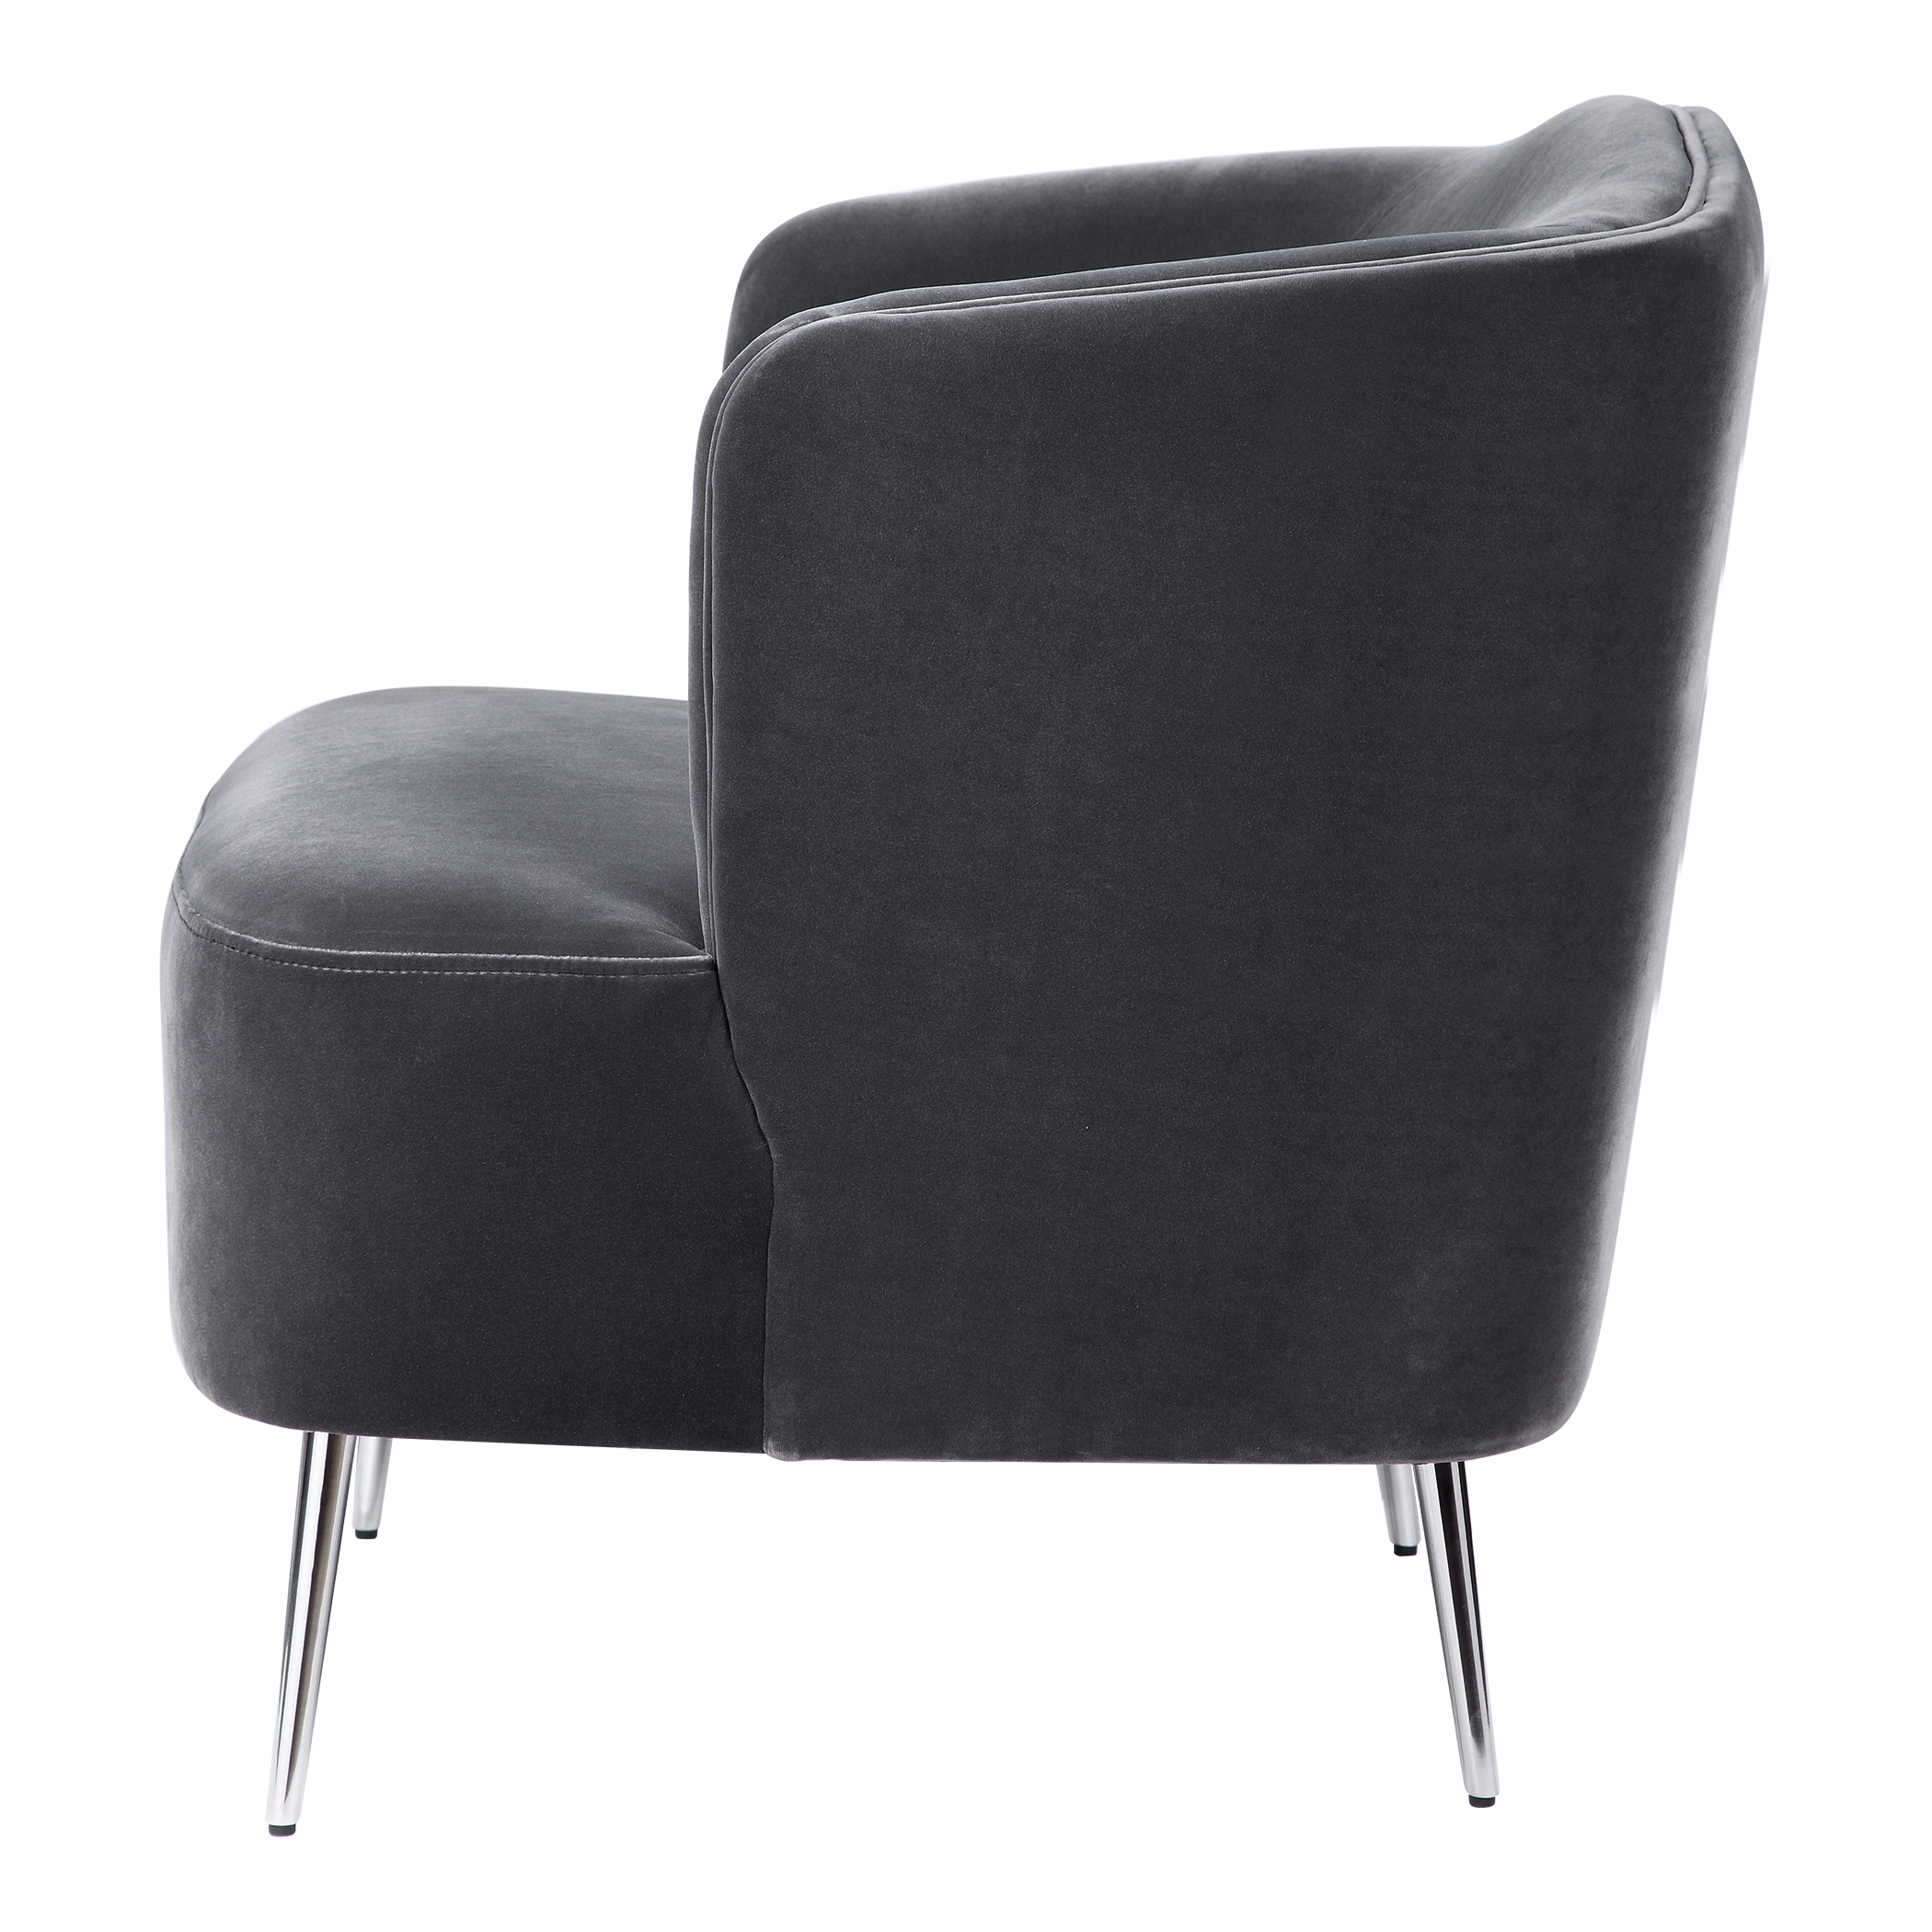 Alboran Gray Accent Chair - Image 1